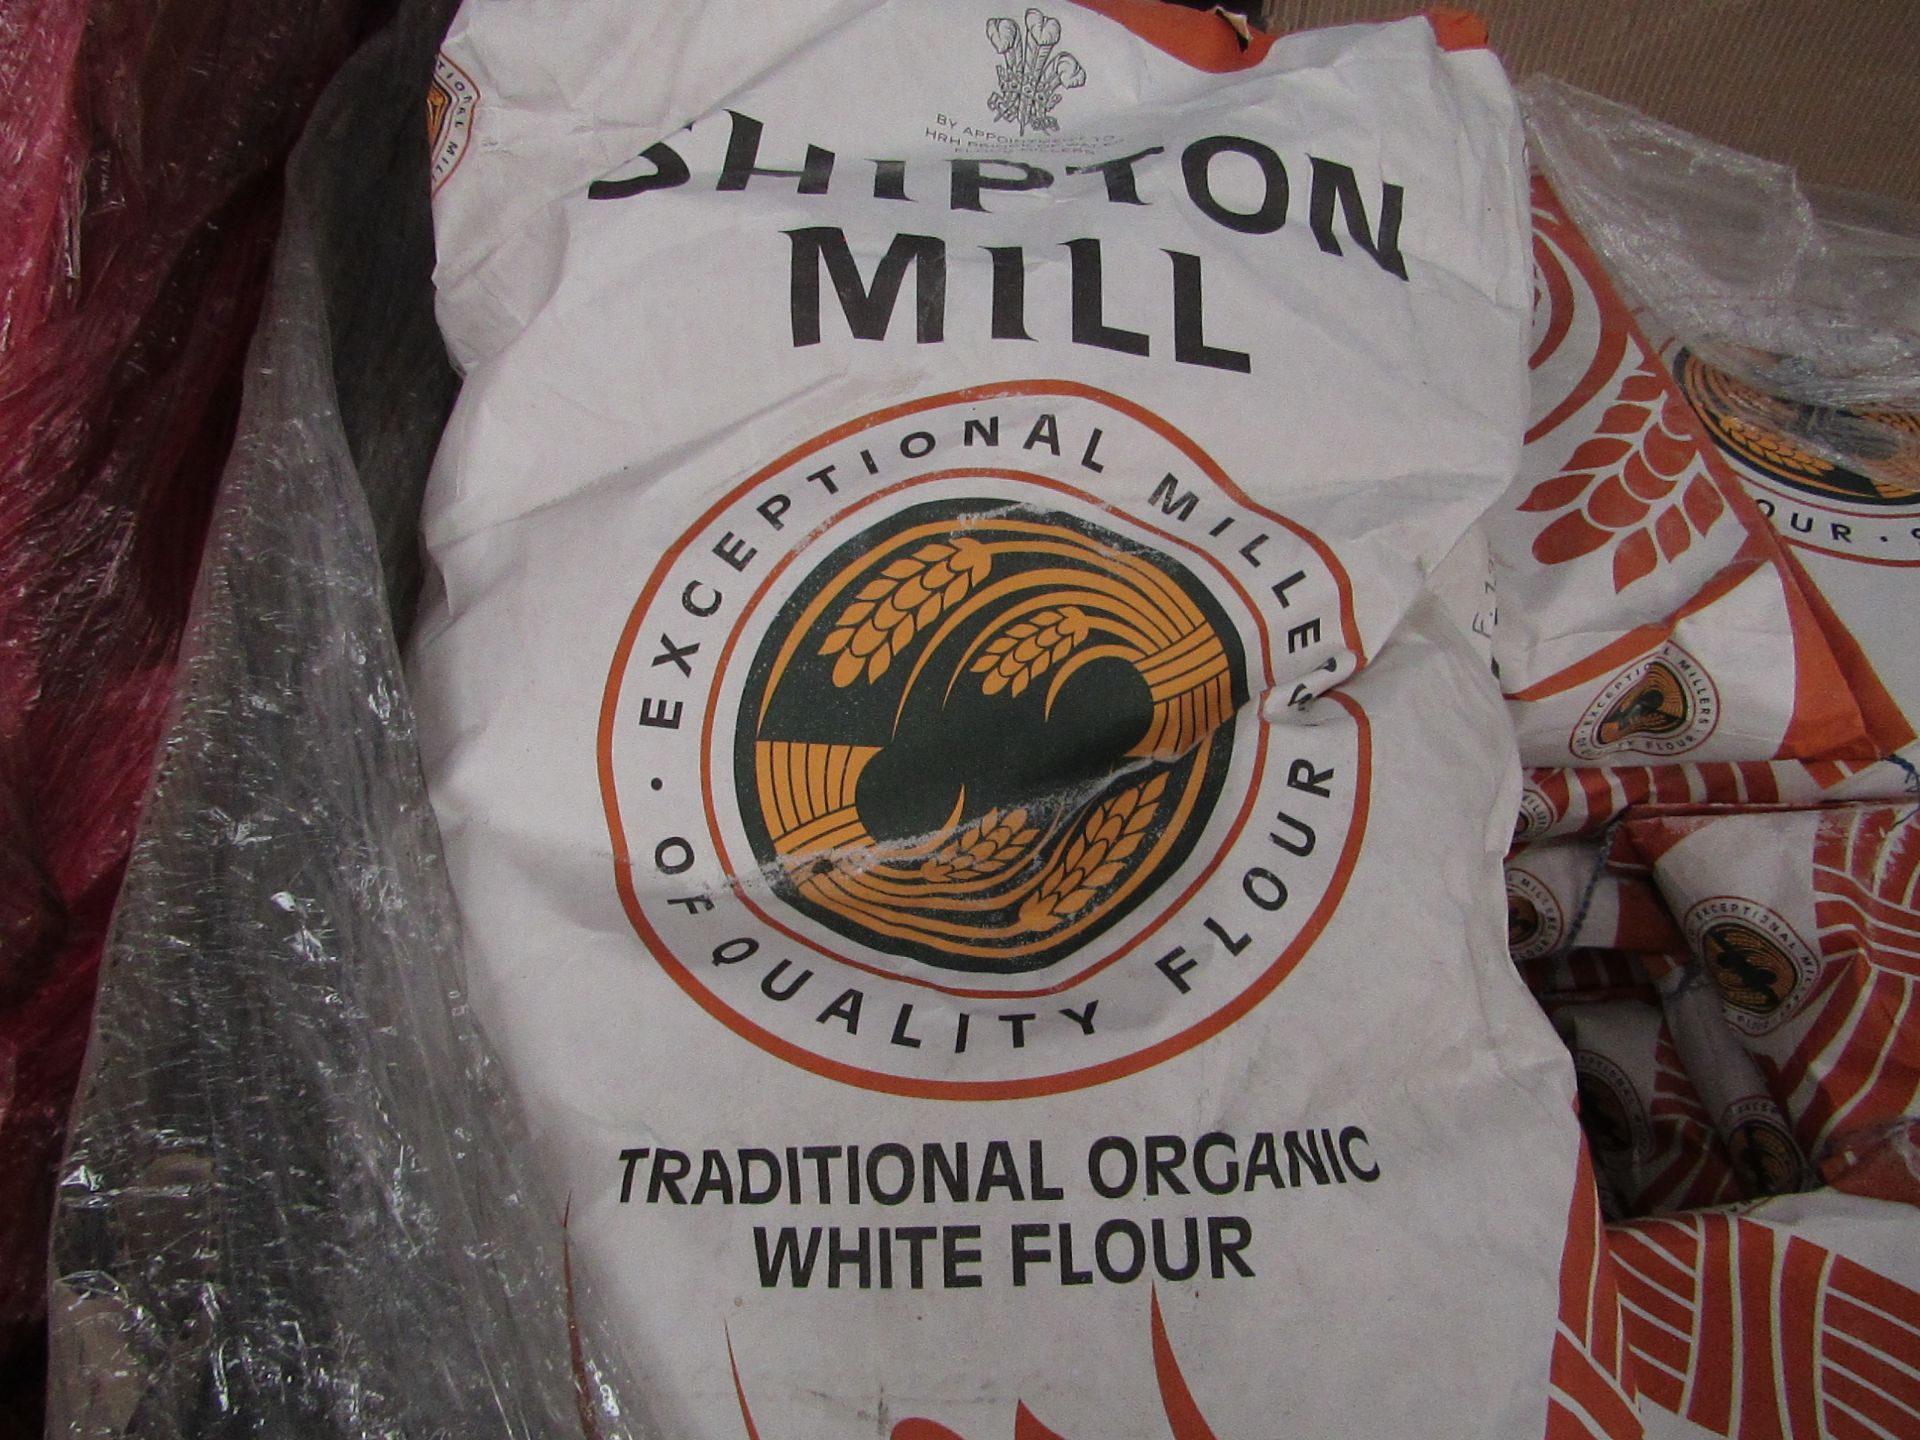 Shipton Mill - Traditional Organic White Flour - 25KG BAG - BB Dec 2021, RRP £24.99 - Image 2 of 2